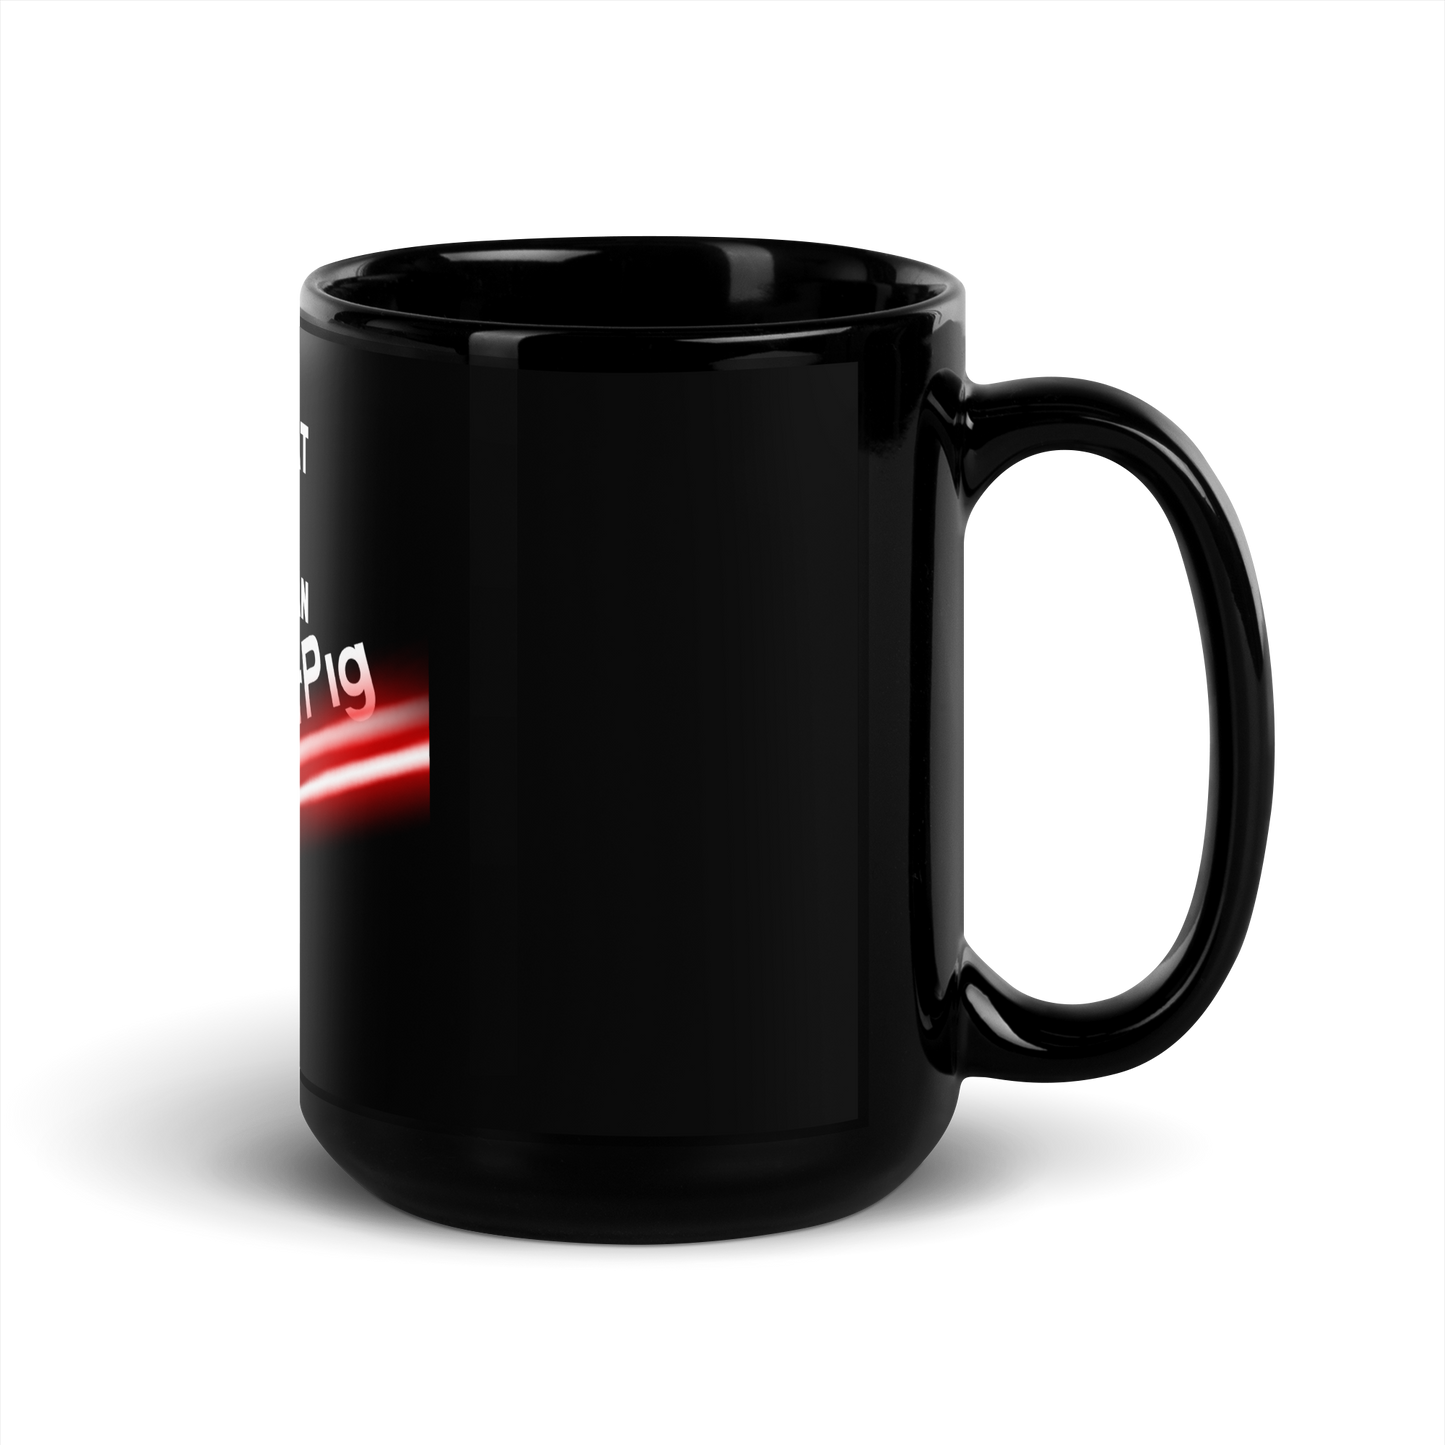 Vote LazerPig Black Mug (US Only)